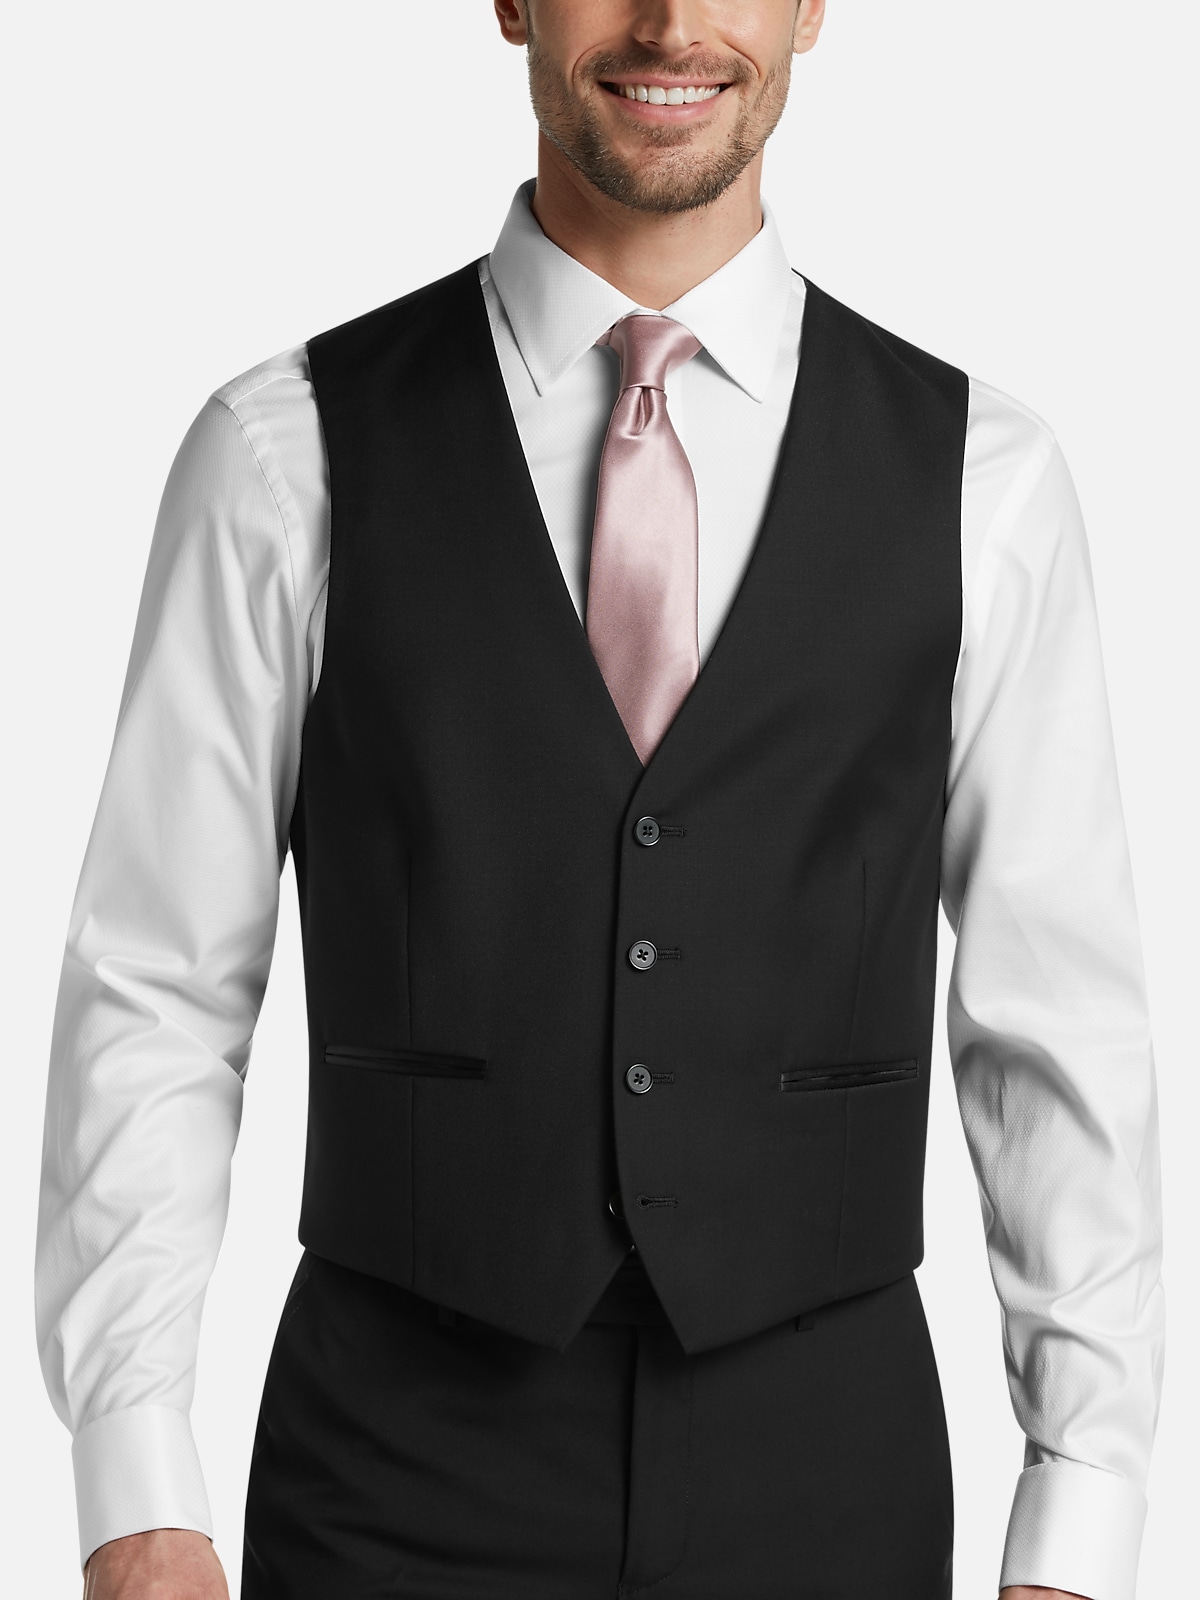 Calvin Klein Slim Fit Suit Separates Tuxedo Vest | All Clothing| Men's ...